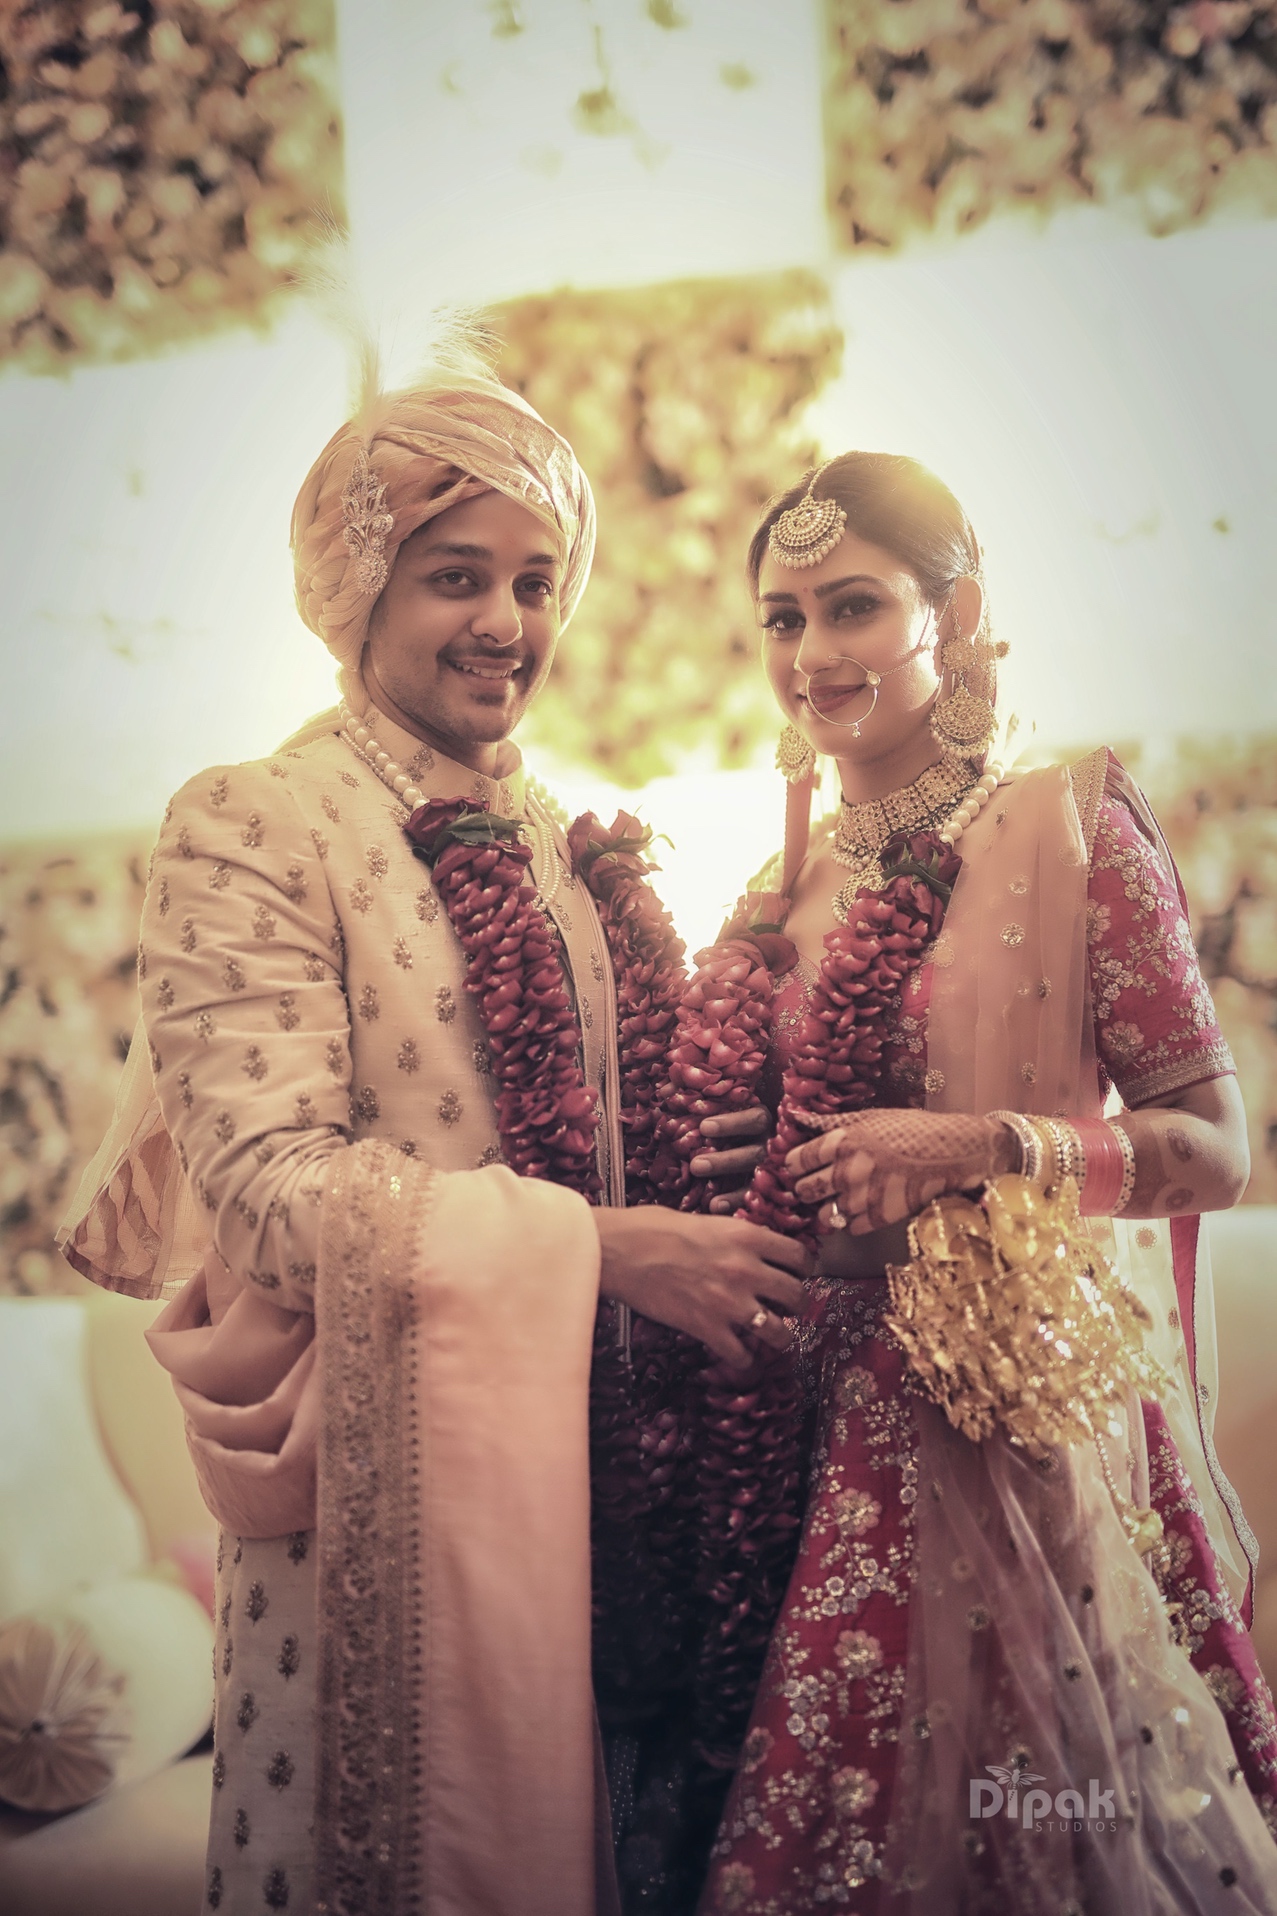 WEDDINGS#weddinginspiration#bridegroom#weddingaccessories … | Indian  wedding photography couples, Wedding couple poses photography, Indian  wedding photography poses